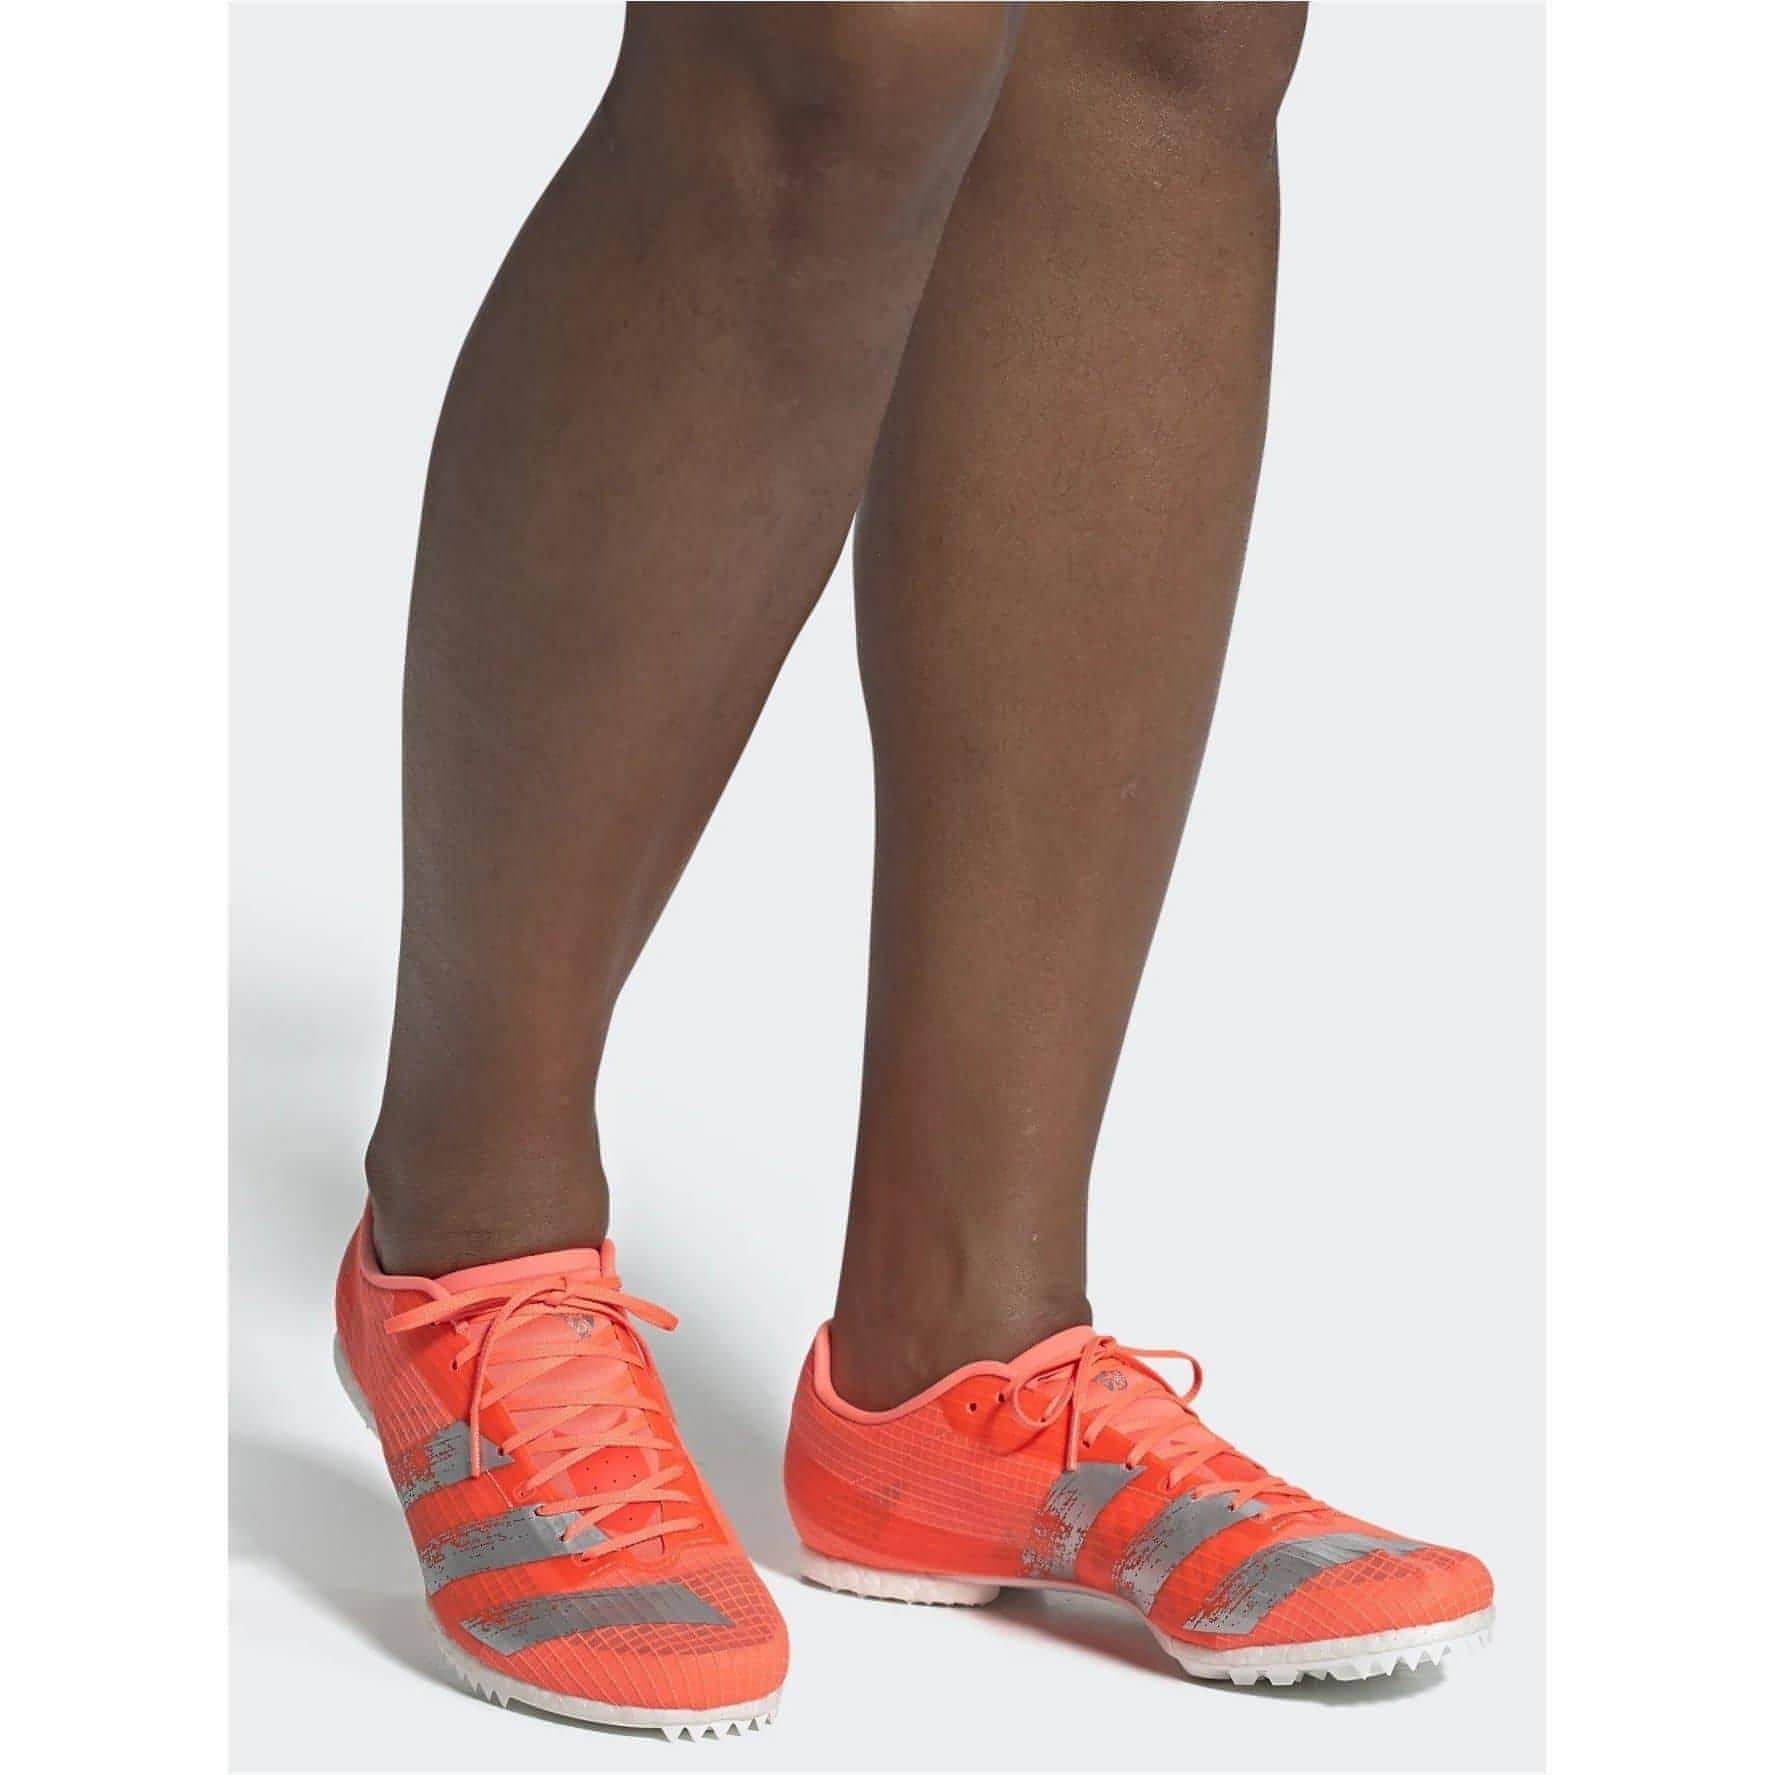 adidas Adizero MD Running Spikes - Orange - Start Fitness